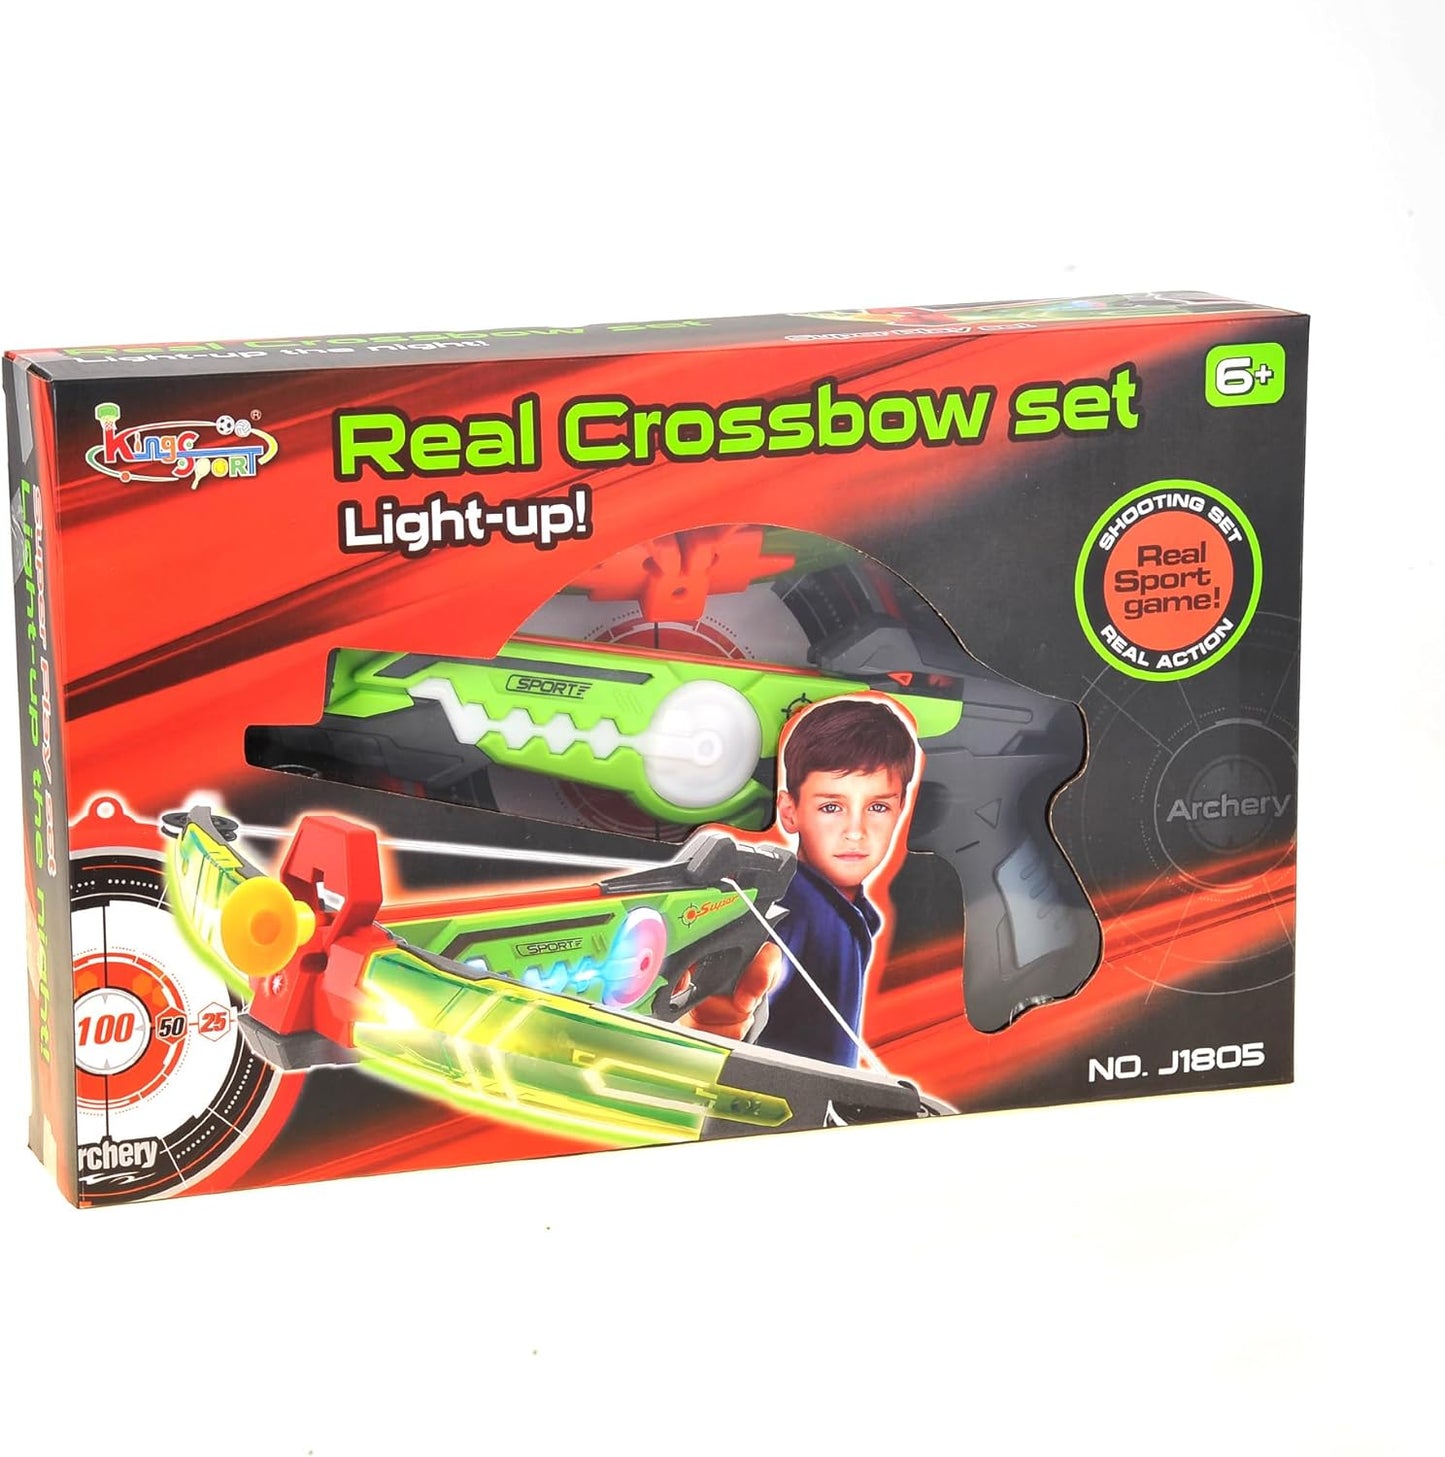 PowerTRC Light Up LED Toy Crossbow Set for Kids